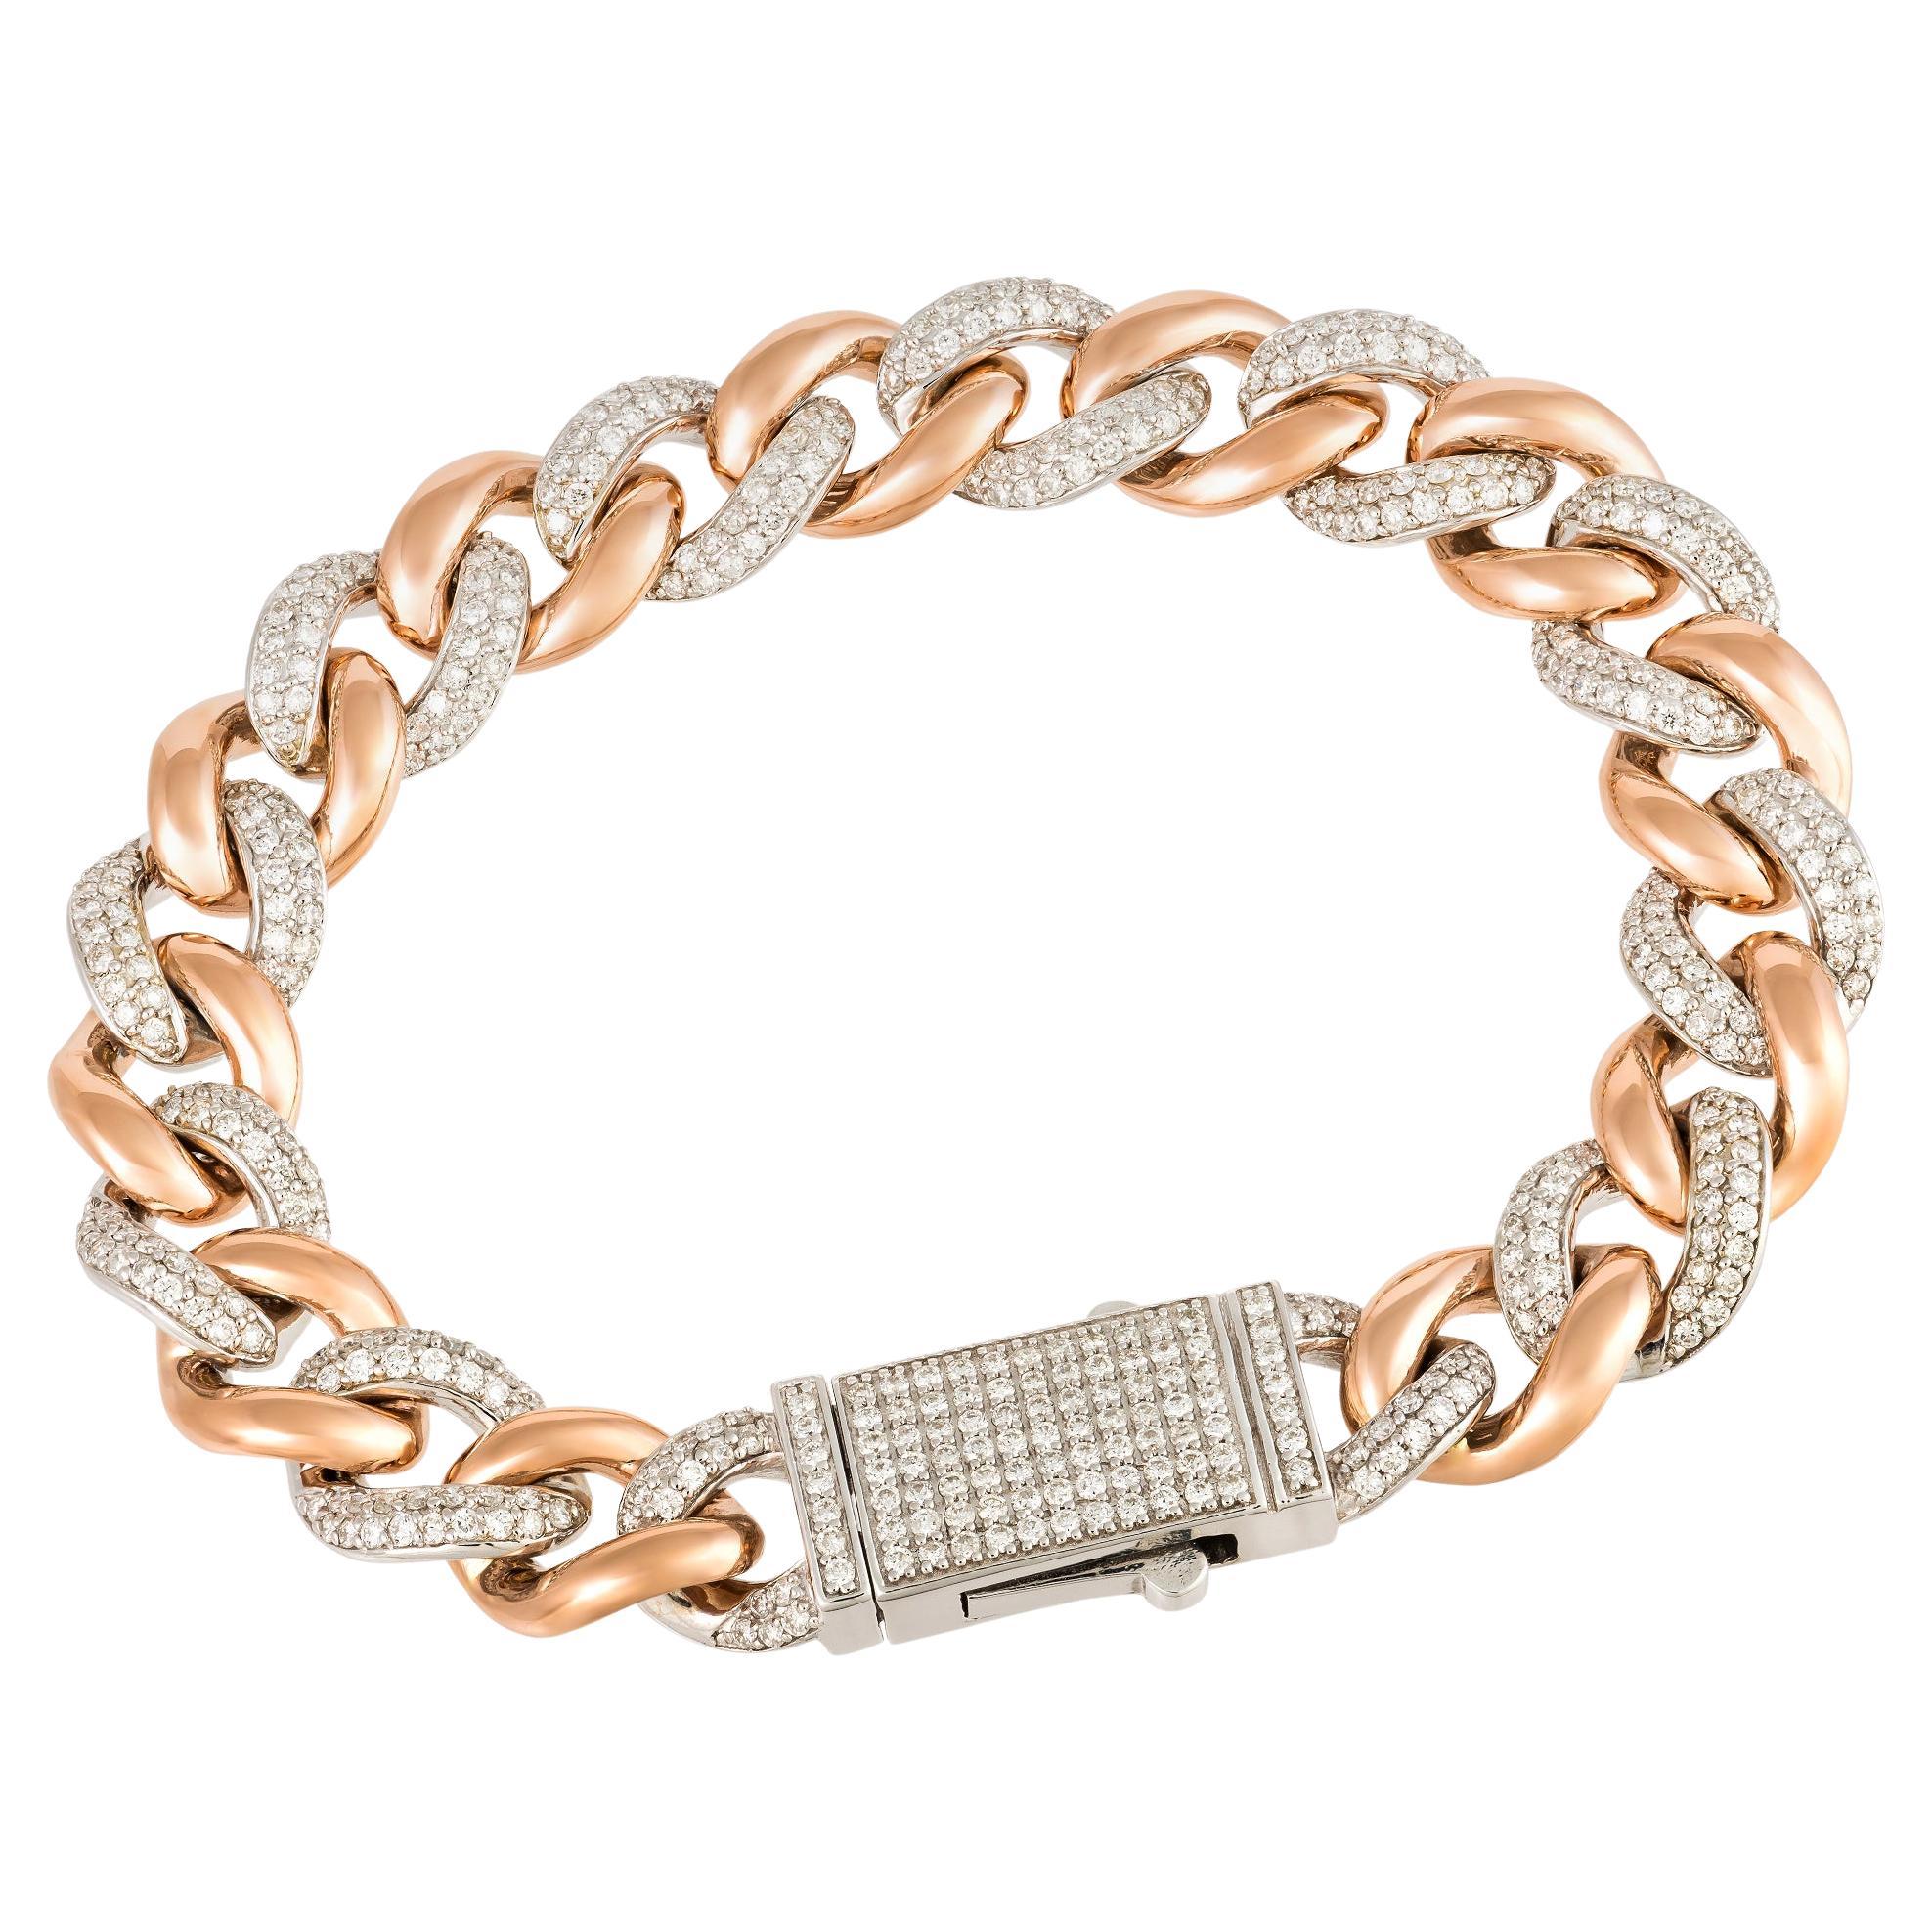 Chain Unique White Pink Gold 18K Bracelet Diamond for Her